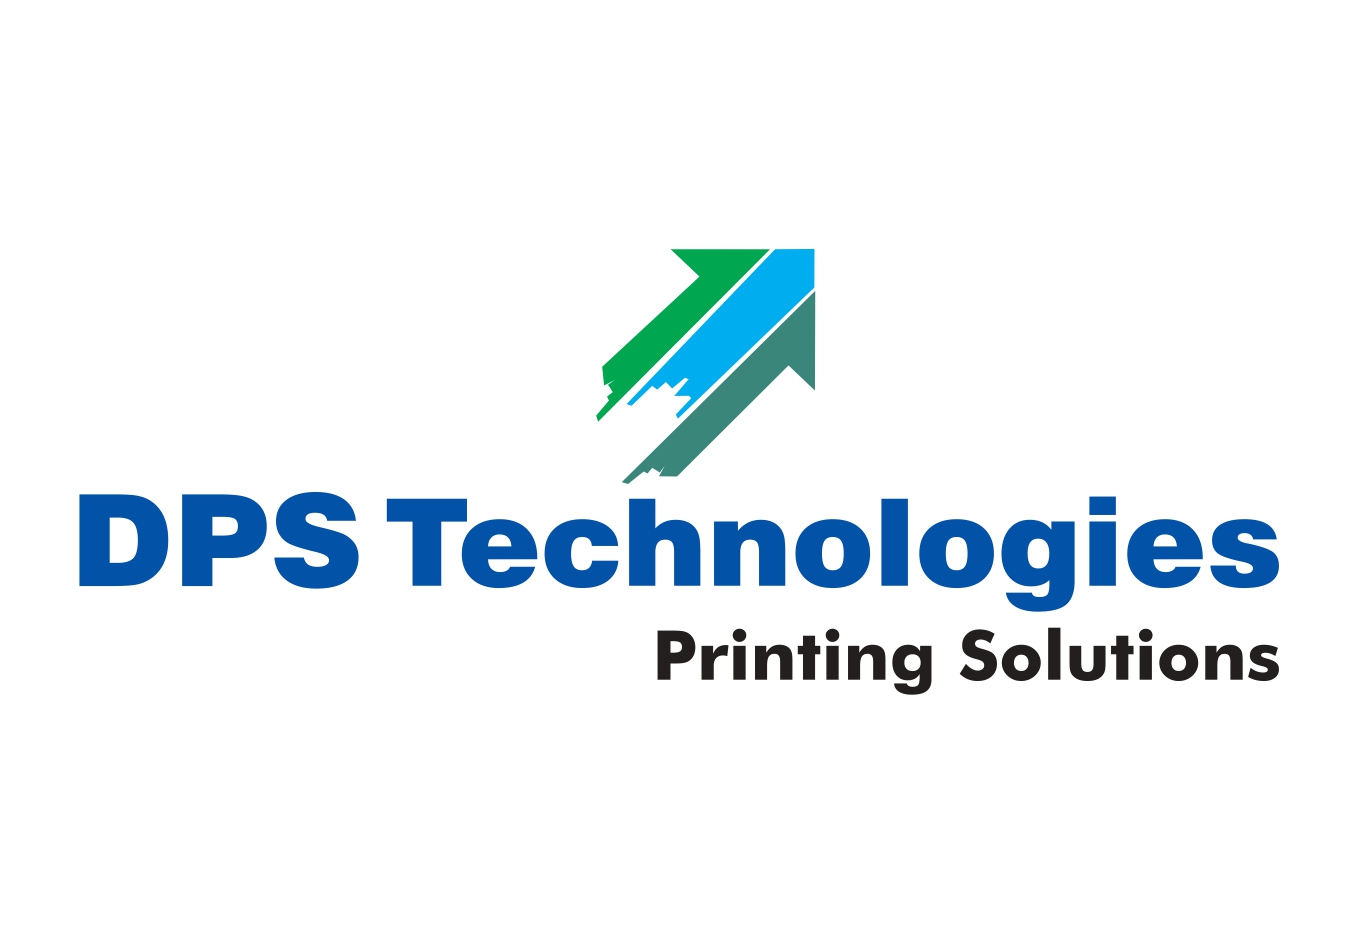 DPS advertising Logo PNG Transparent & SVG Vector - Freebie Supply